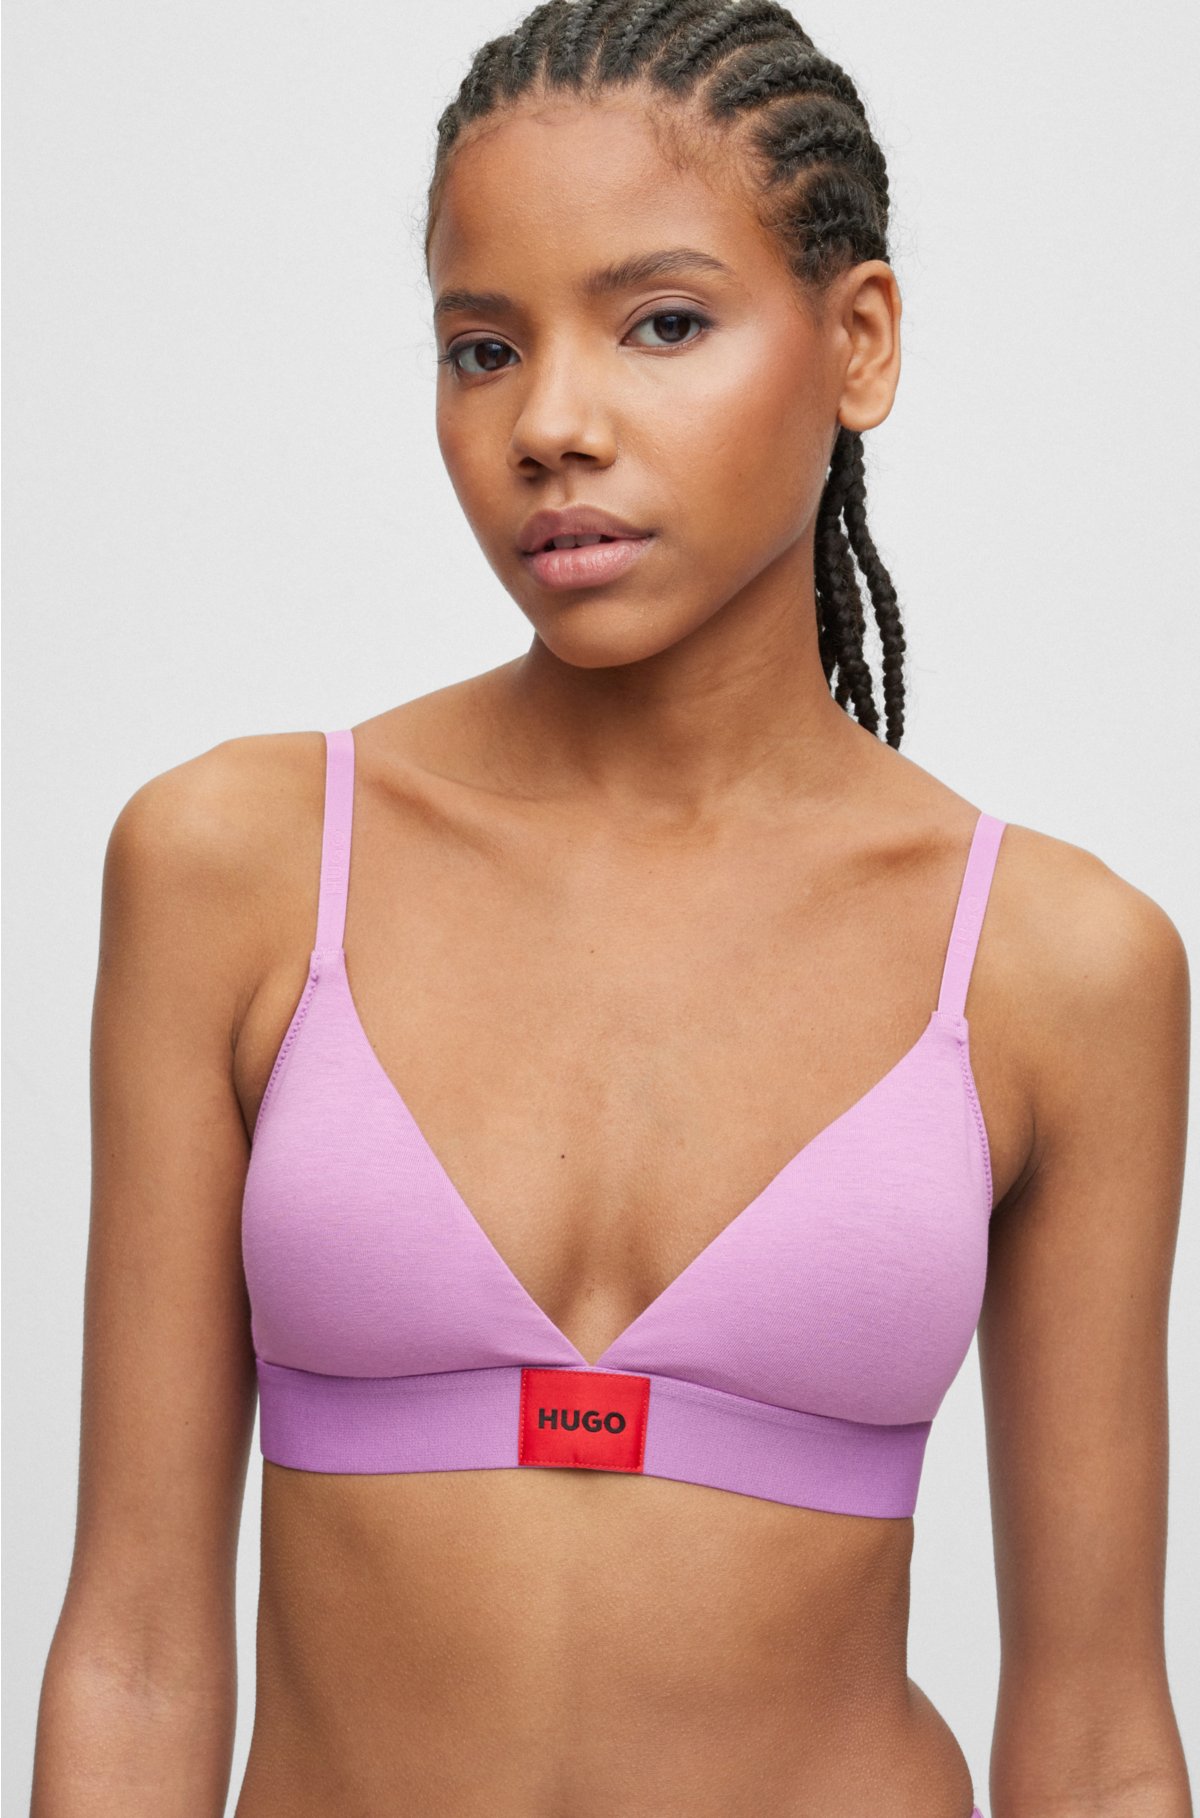 HUGO - Stretch-cotton triangle bra logo red with label